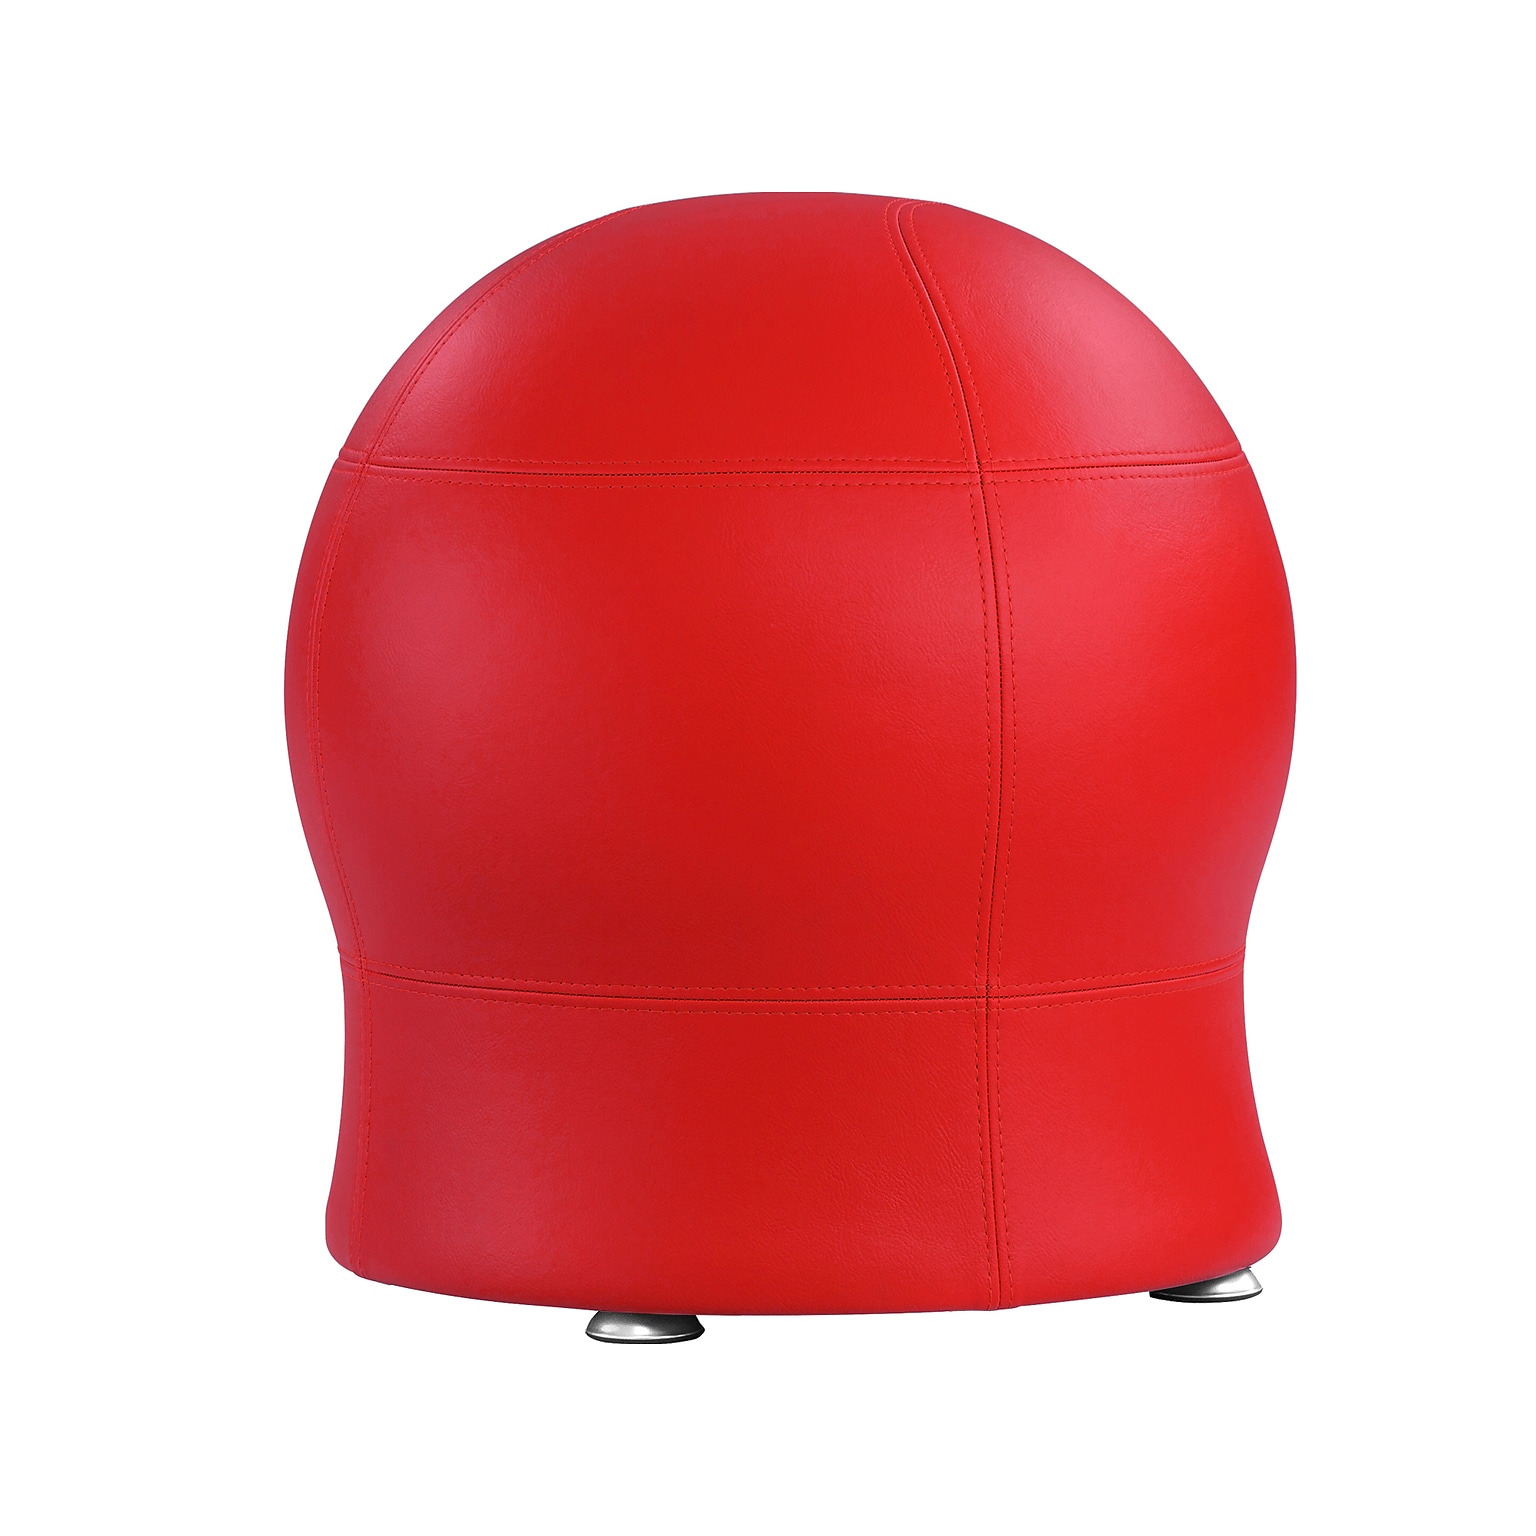 Safco Zenergy Armless Vinyl Ball Chair, Red (4751RV)